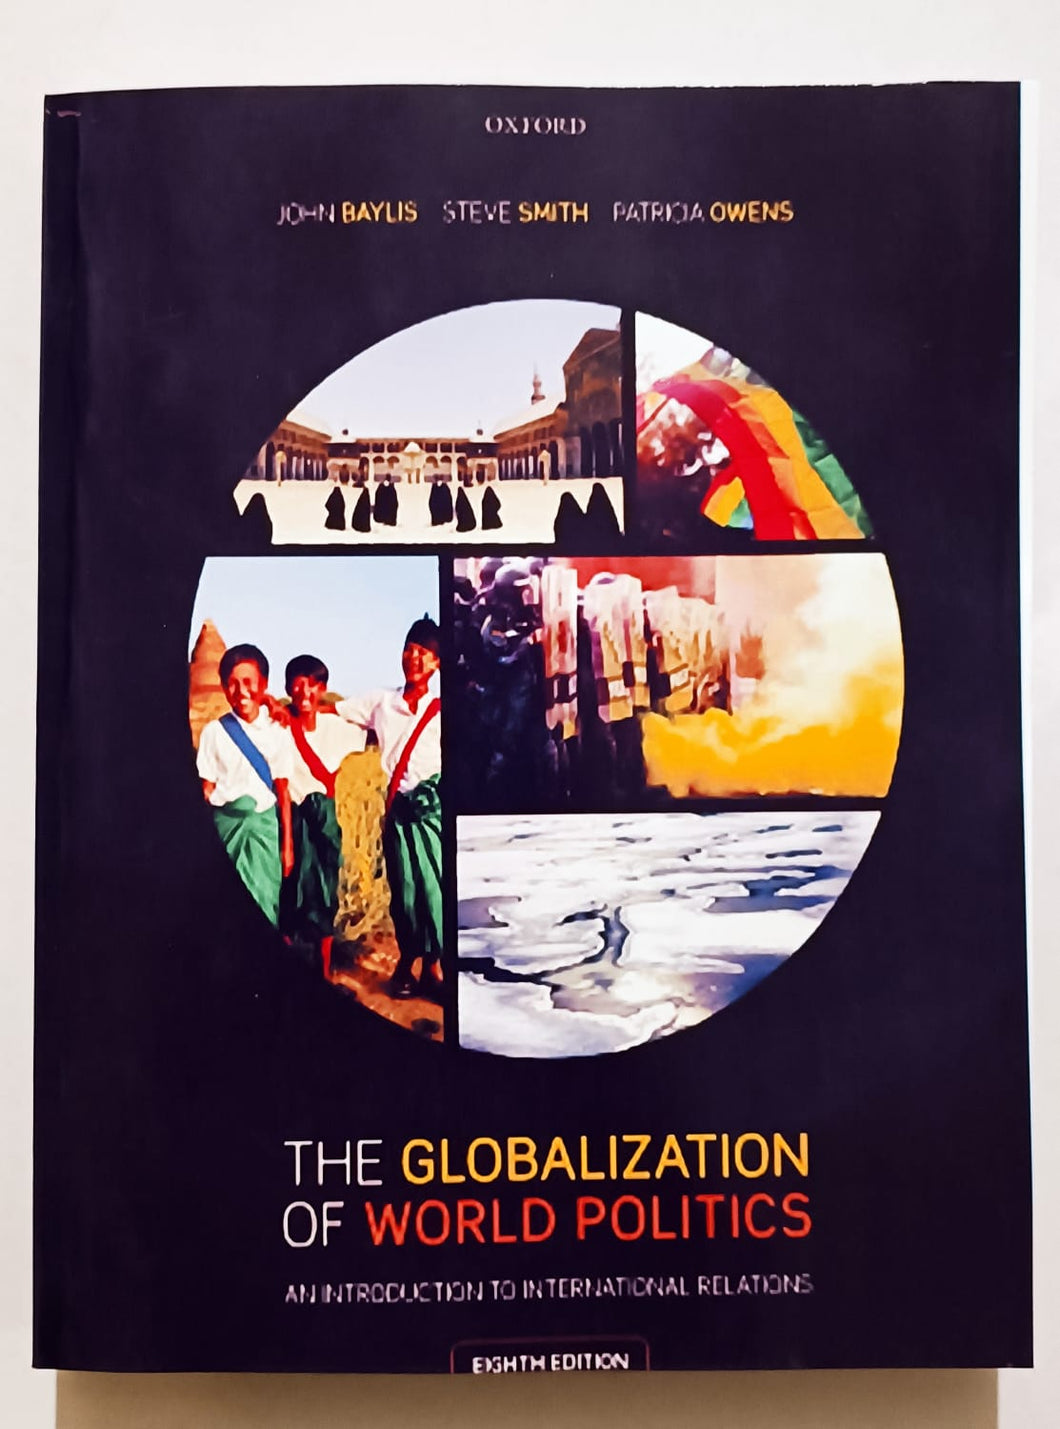 The Globalization of World Politics john Baylis 8th Edition – MOB10656